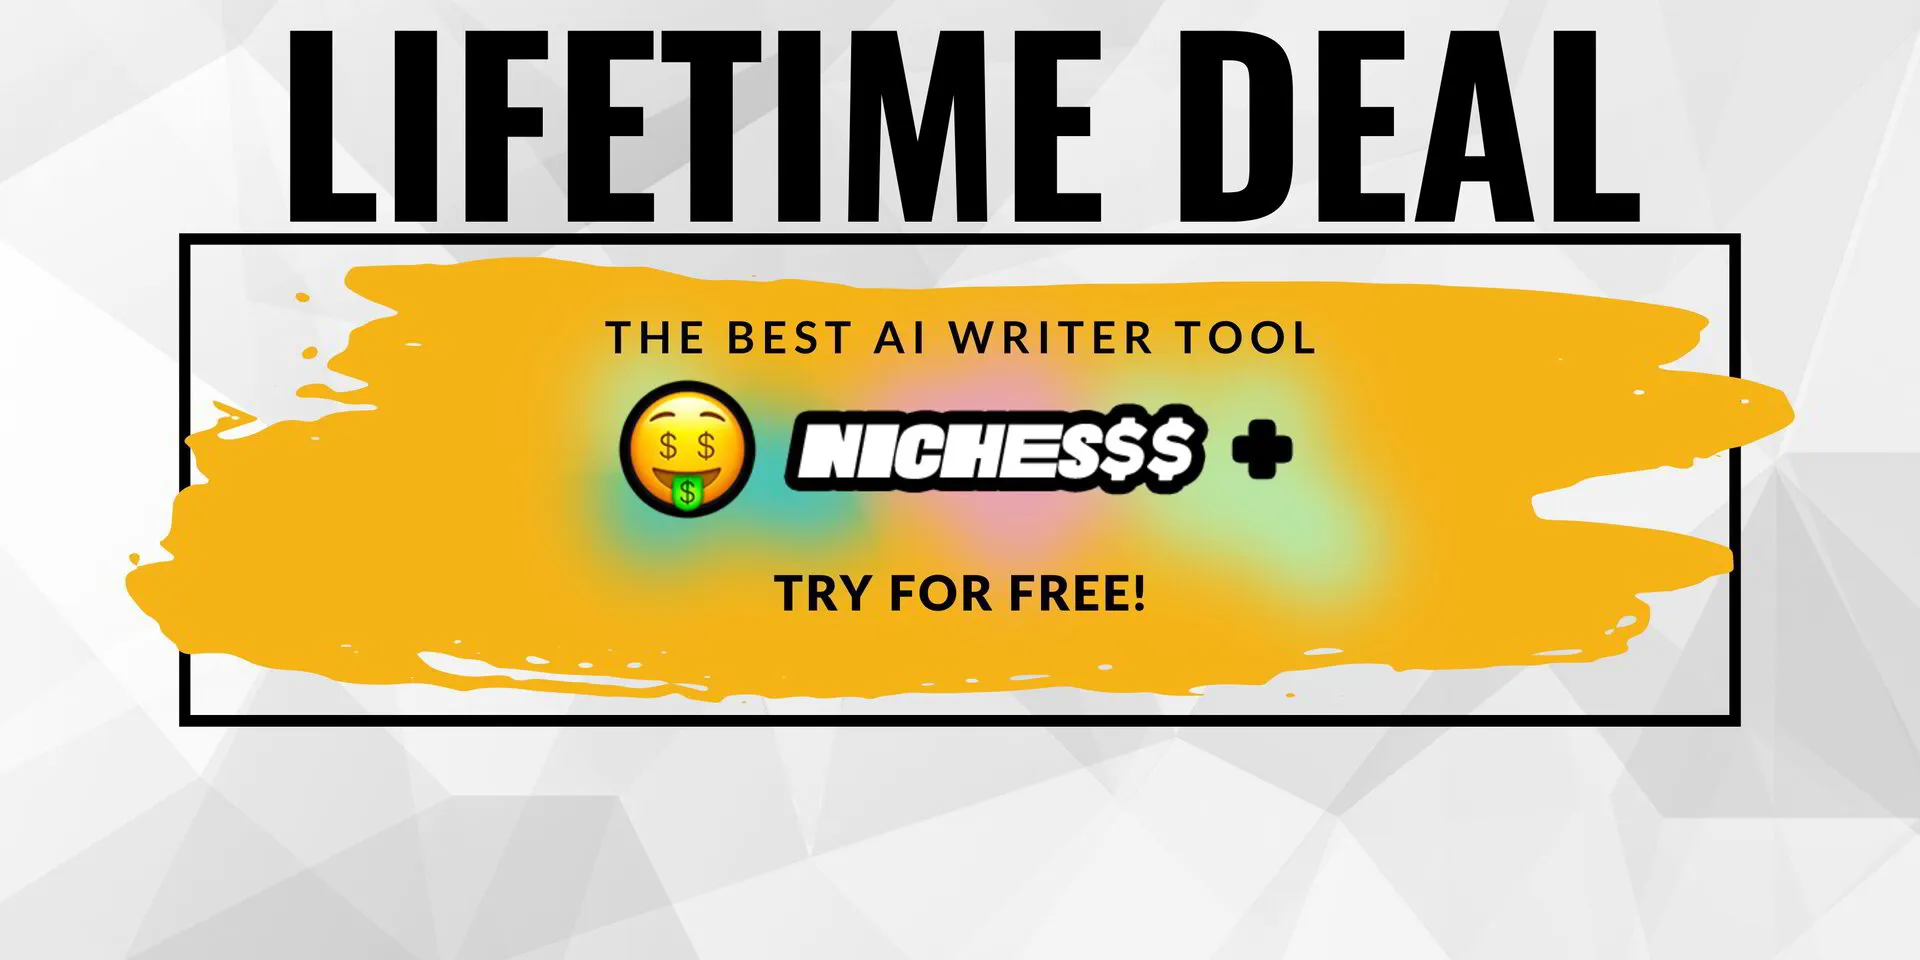 nichesss promo deal coupon lifetime deals